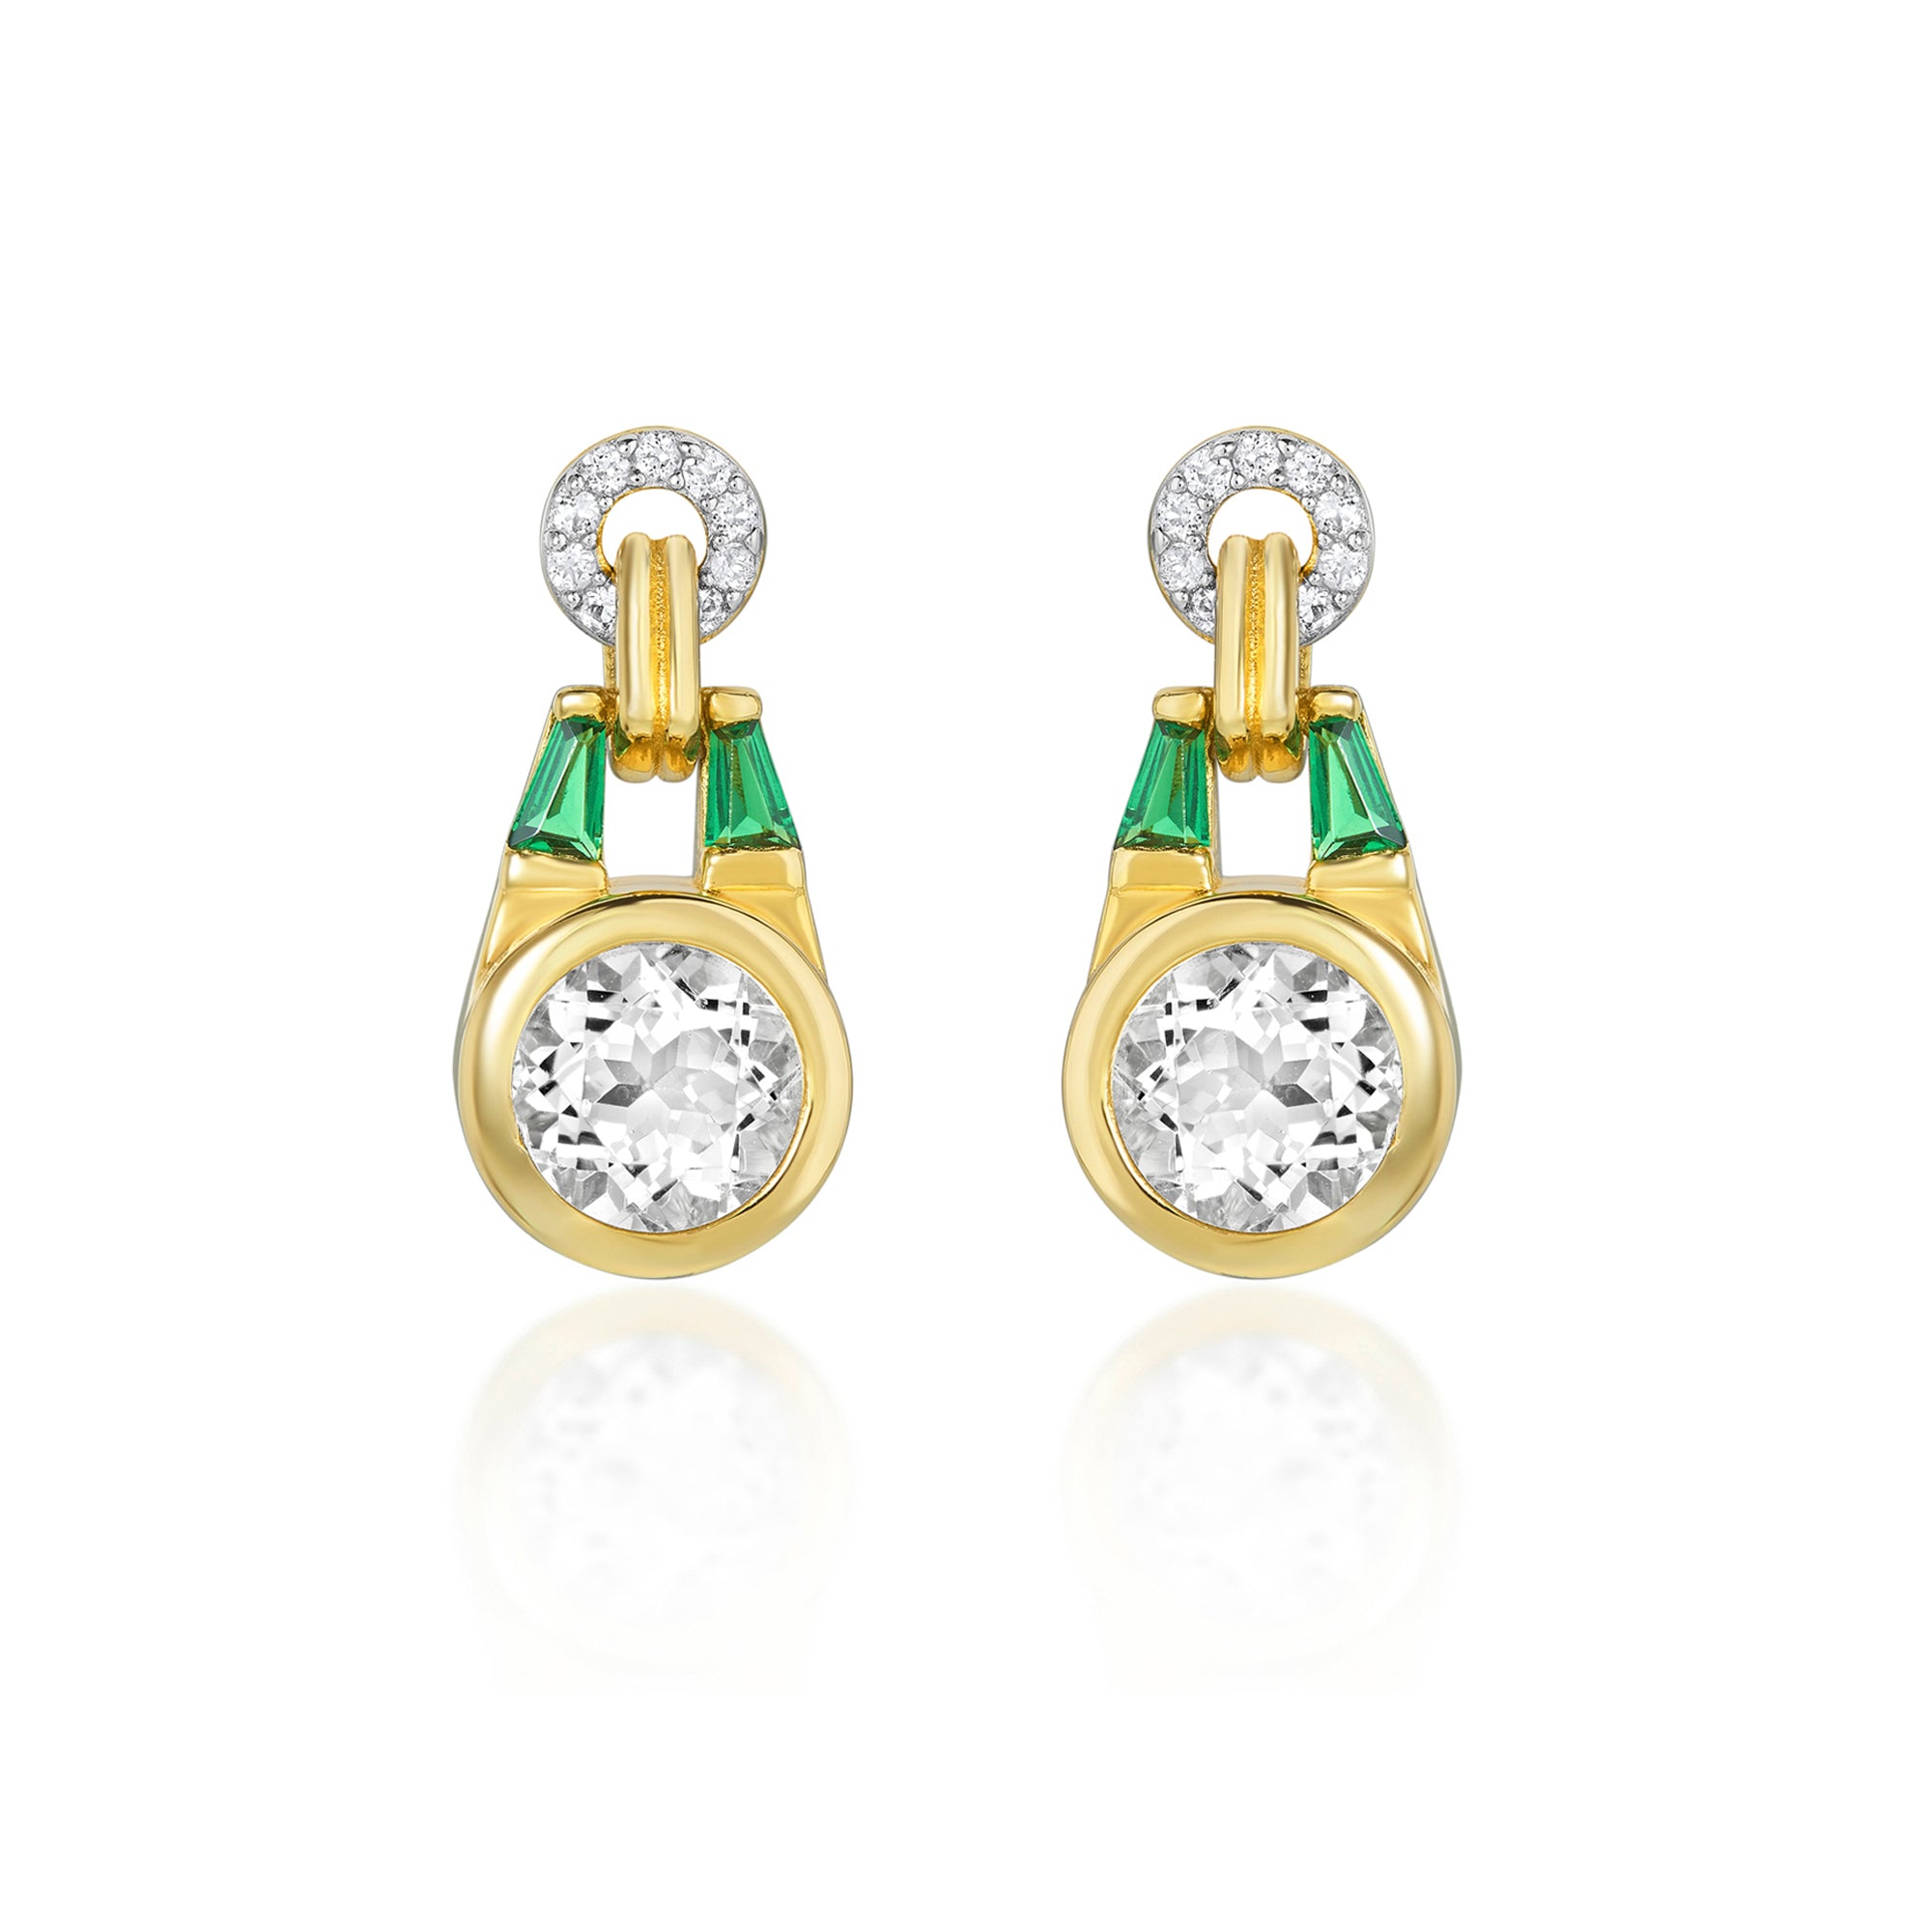 Olive Gold Earrings in White Topaz + Emerald Green Stone